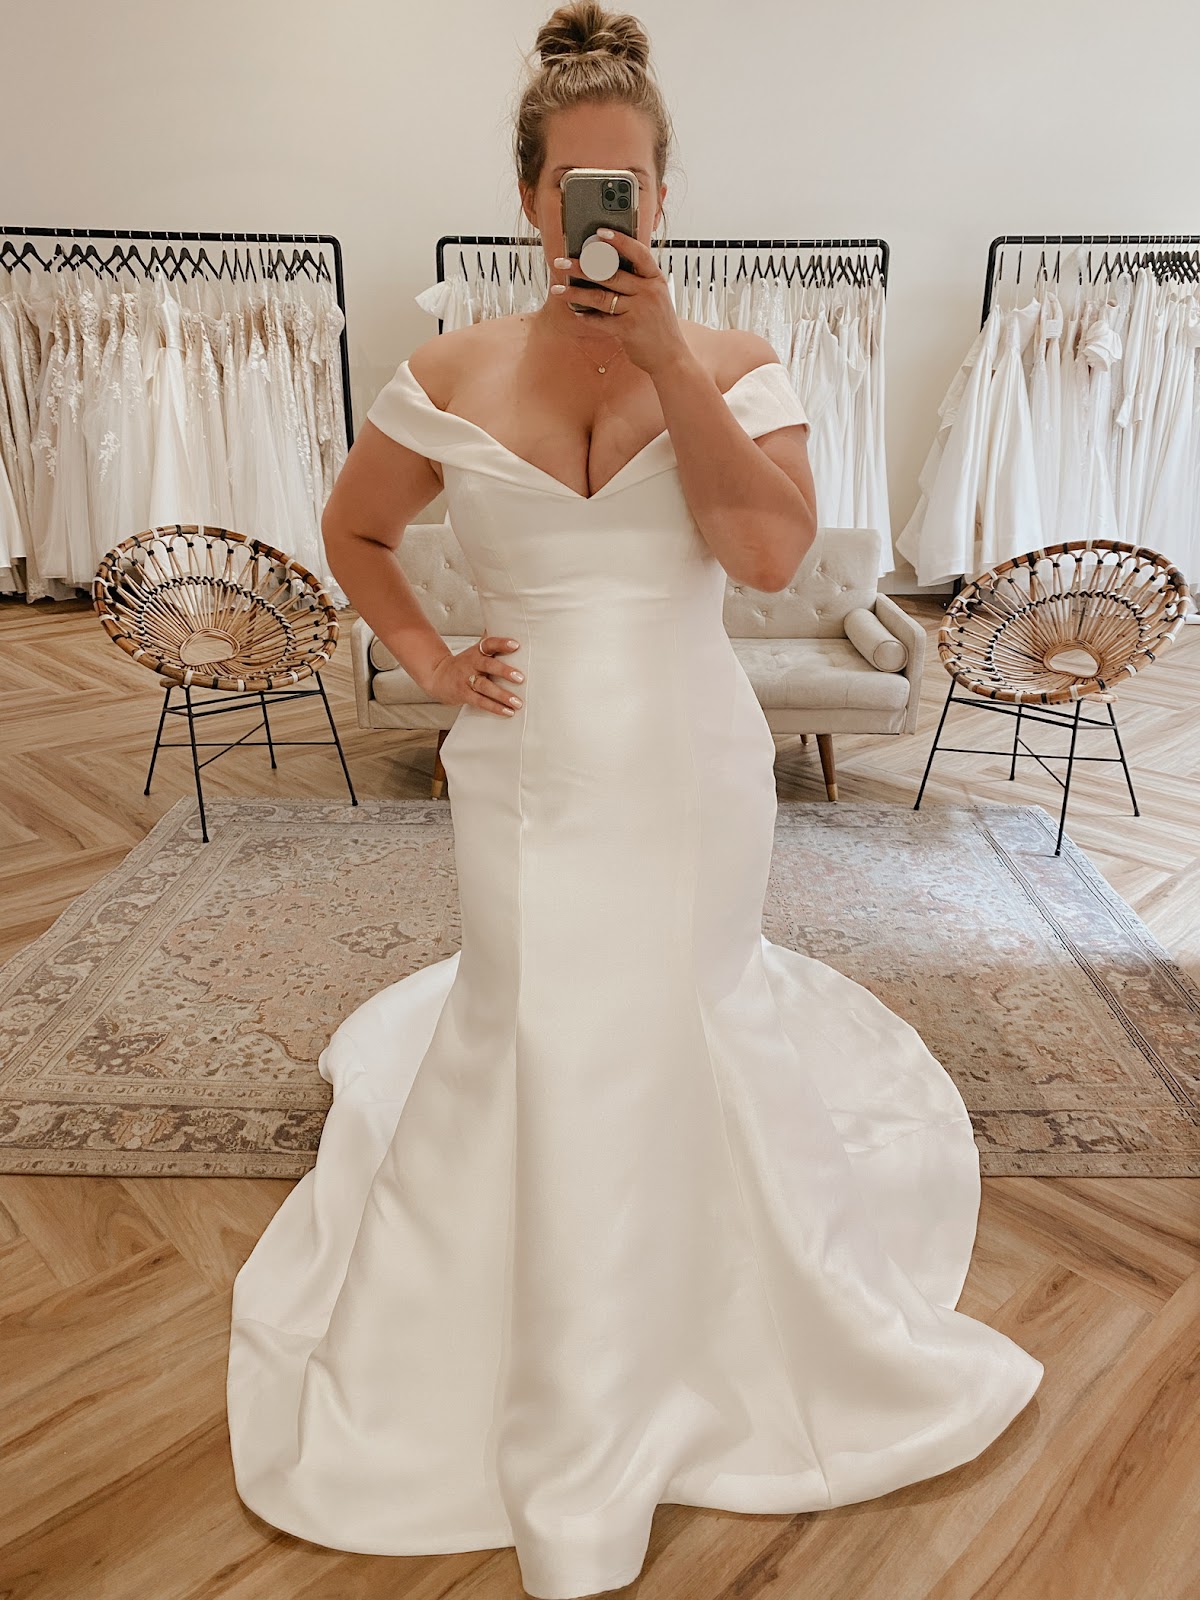 Bespoke Bride | Boise Bridal Shop 4